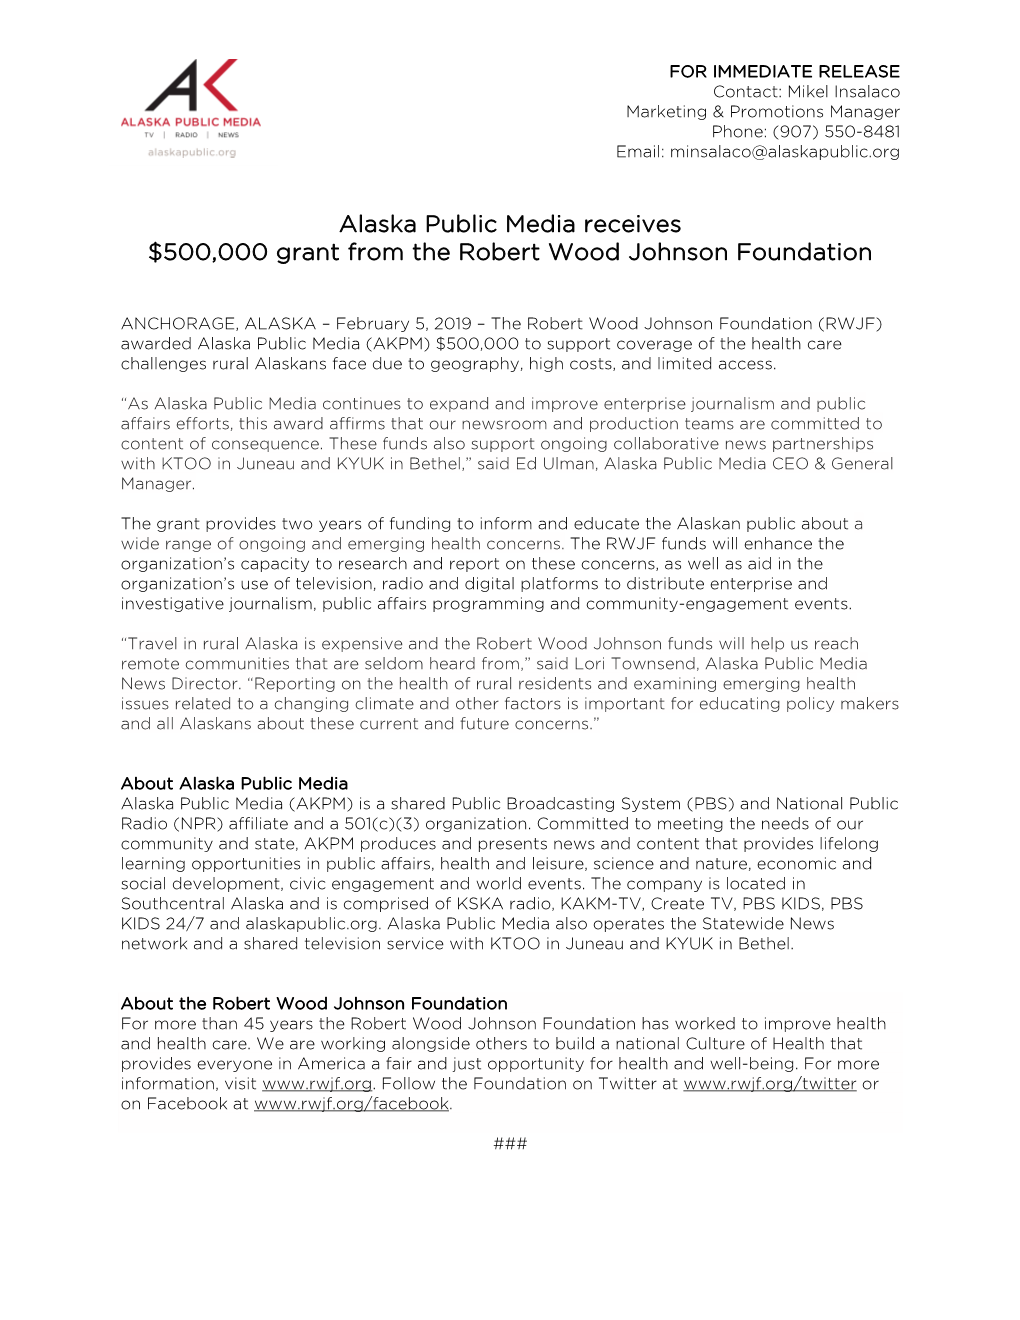 Alaska Public Media Receives $500,000 Grant from the Robert Wood Johnson Foundation